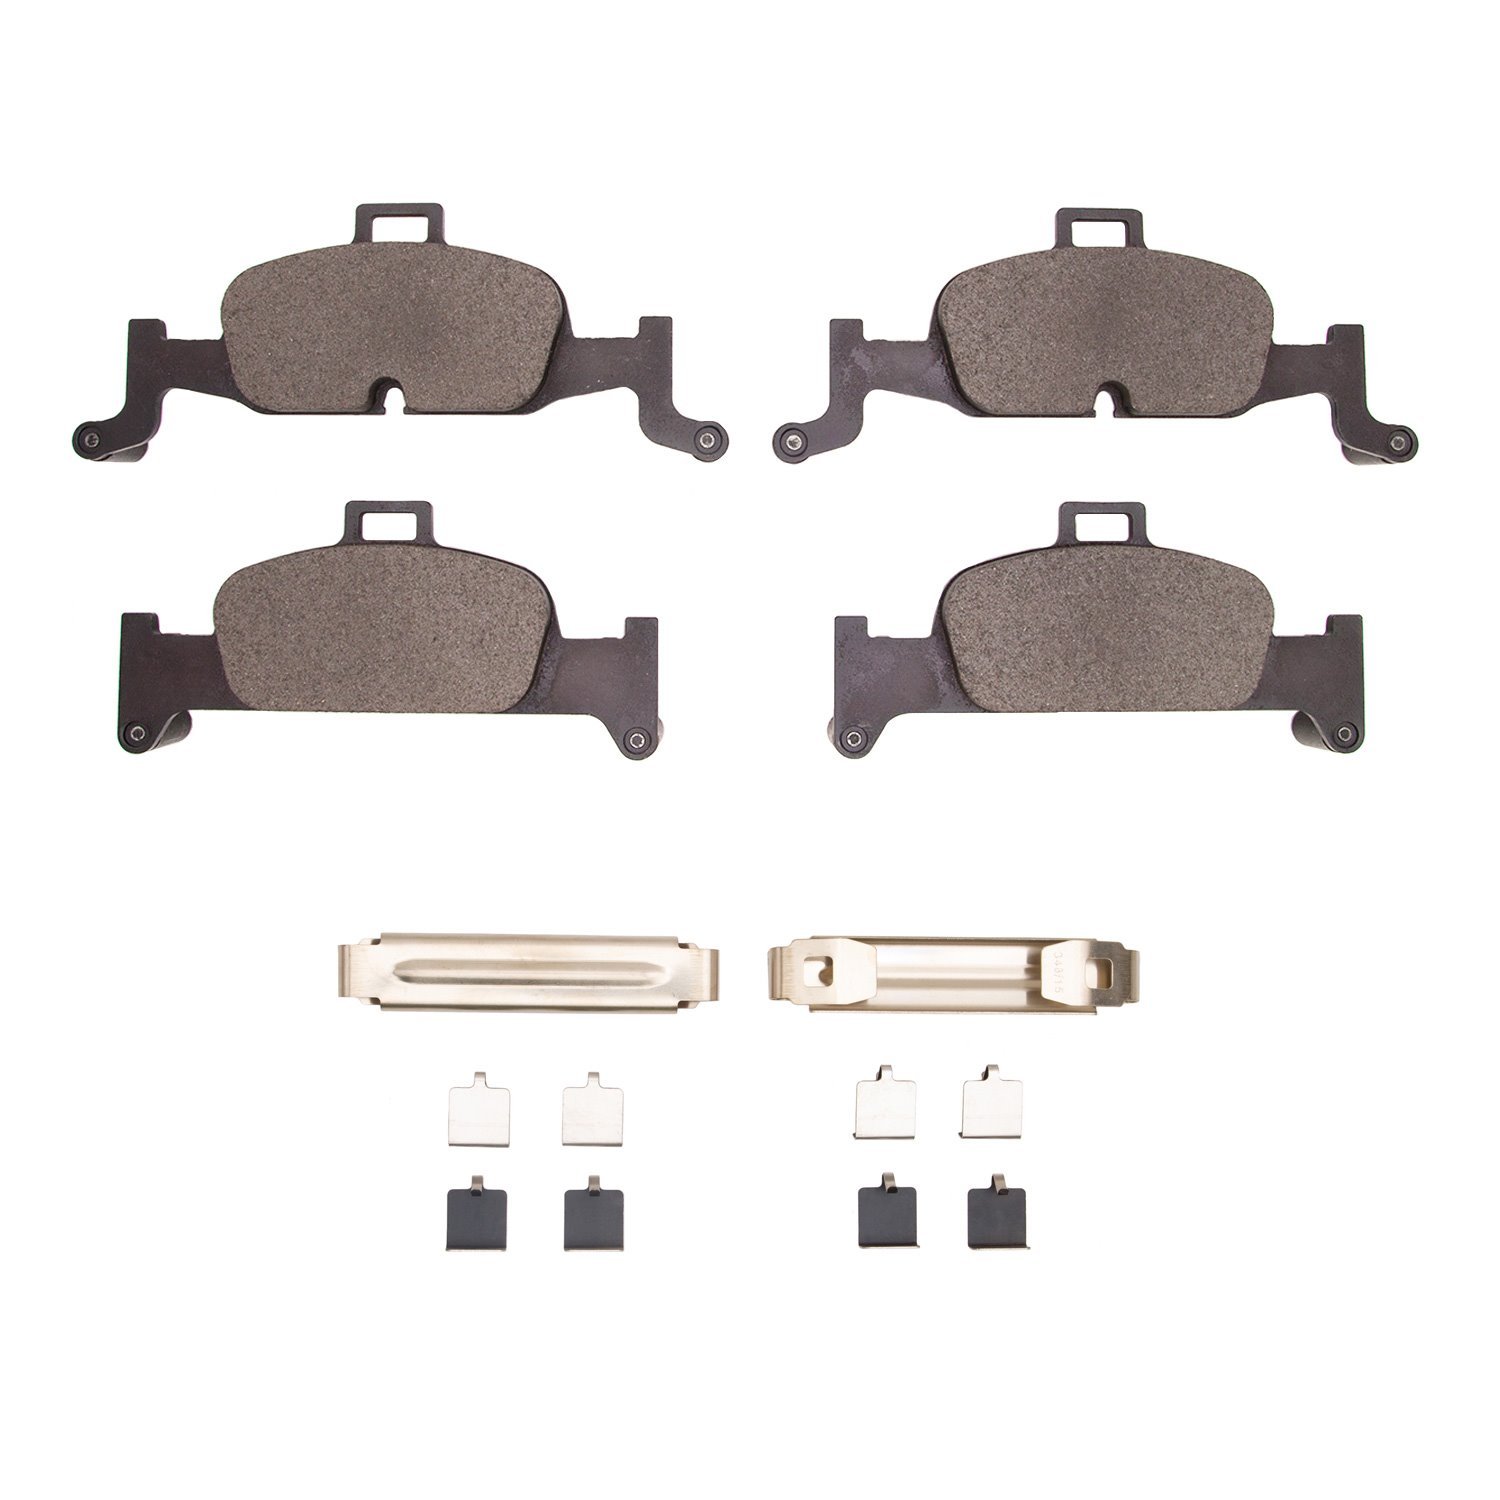 1310-1897-01 3000-Series Ceramic Brake Pads & Hardware Kit, Fits Select Audi/Volkswagen, Position: Front